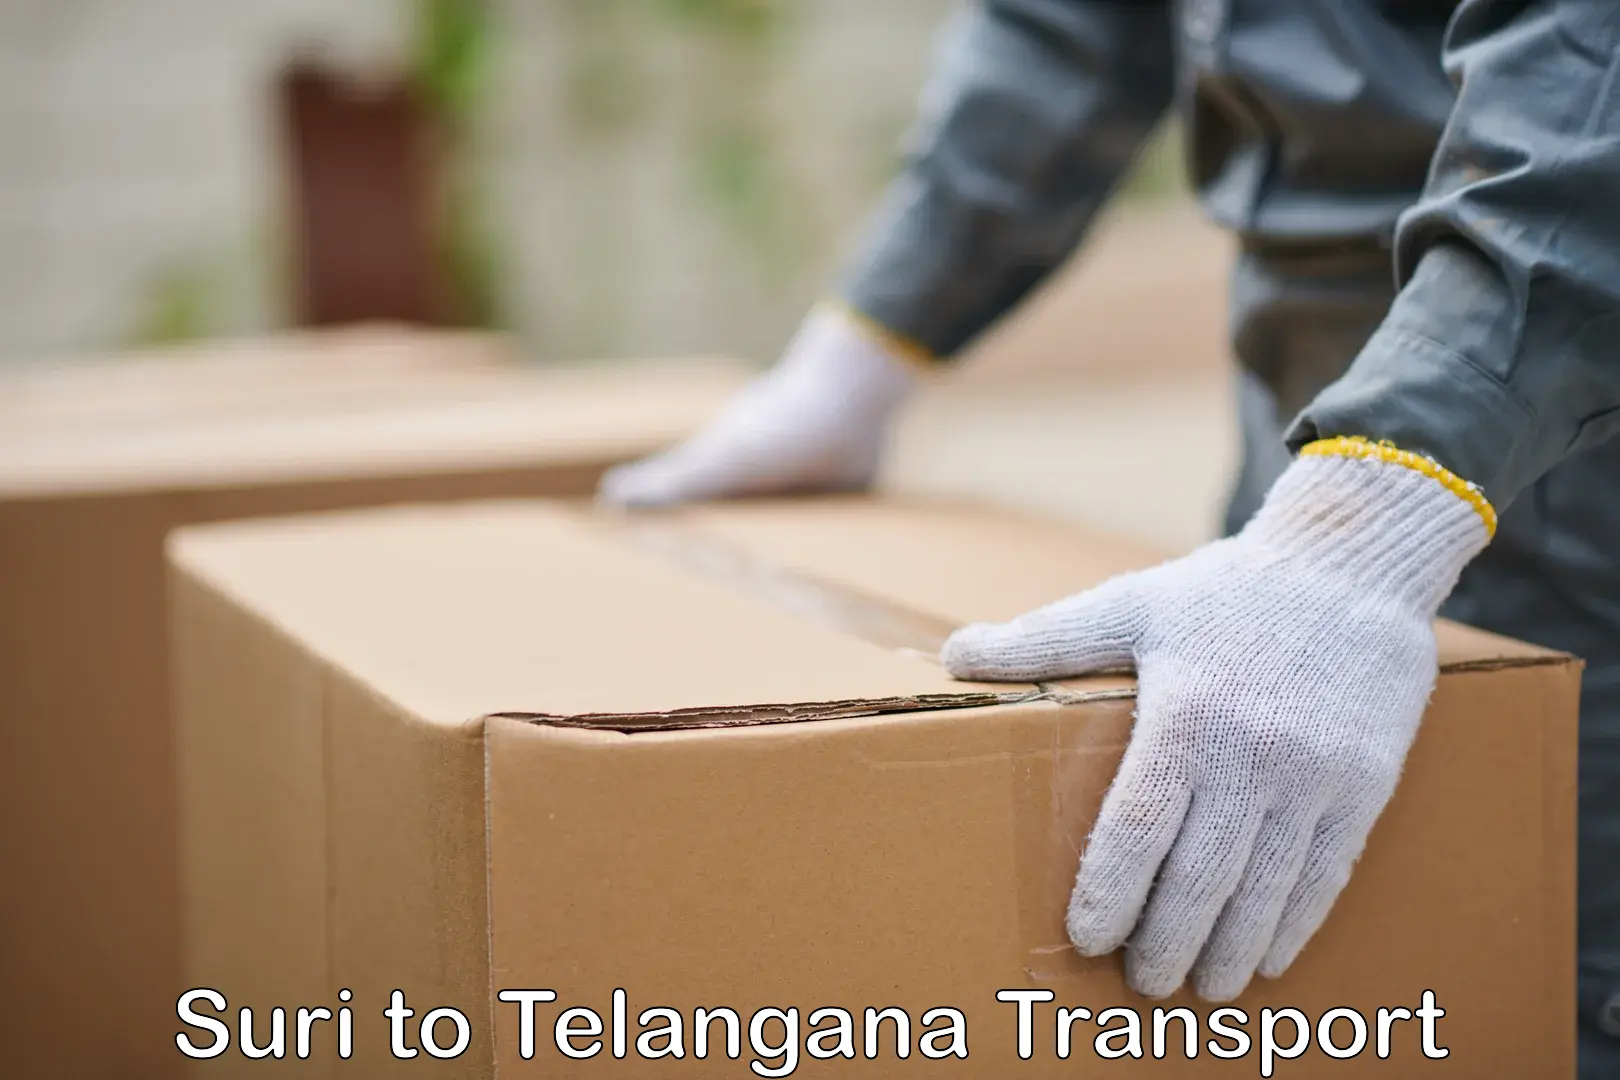 Truck transport companies in India Suri to Telangana